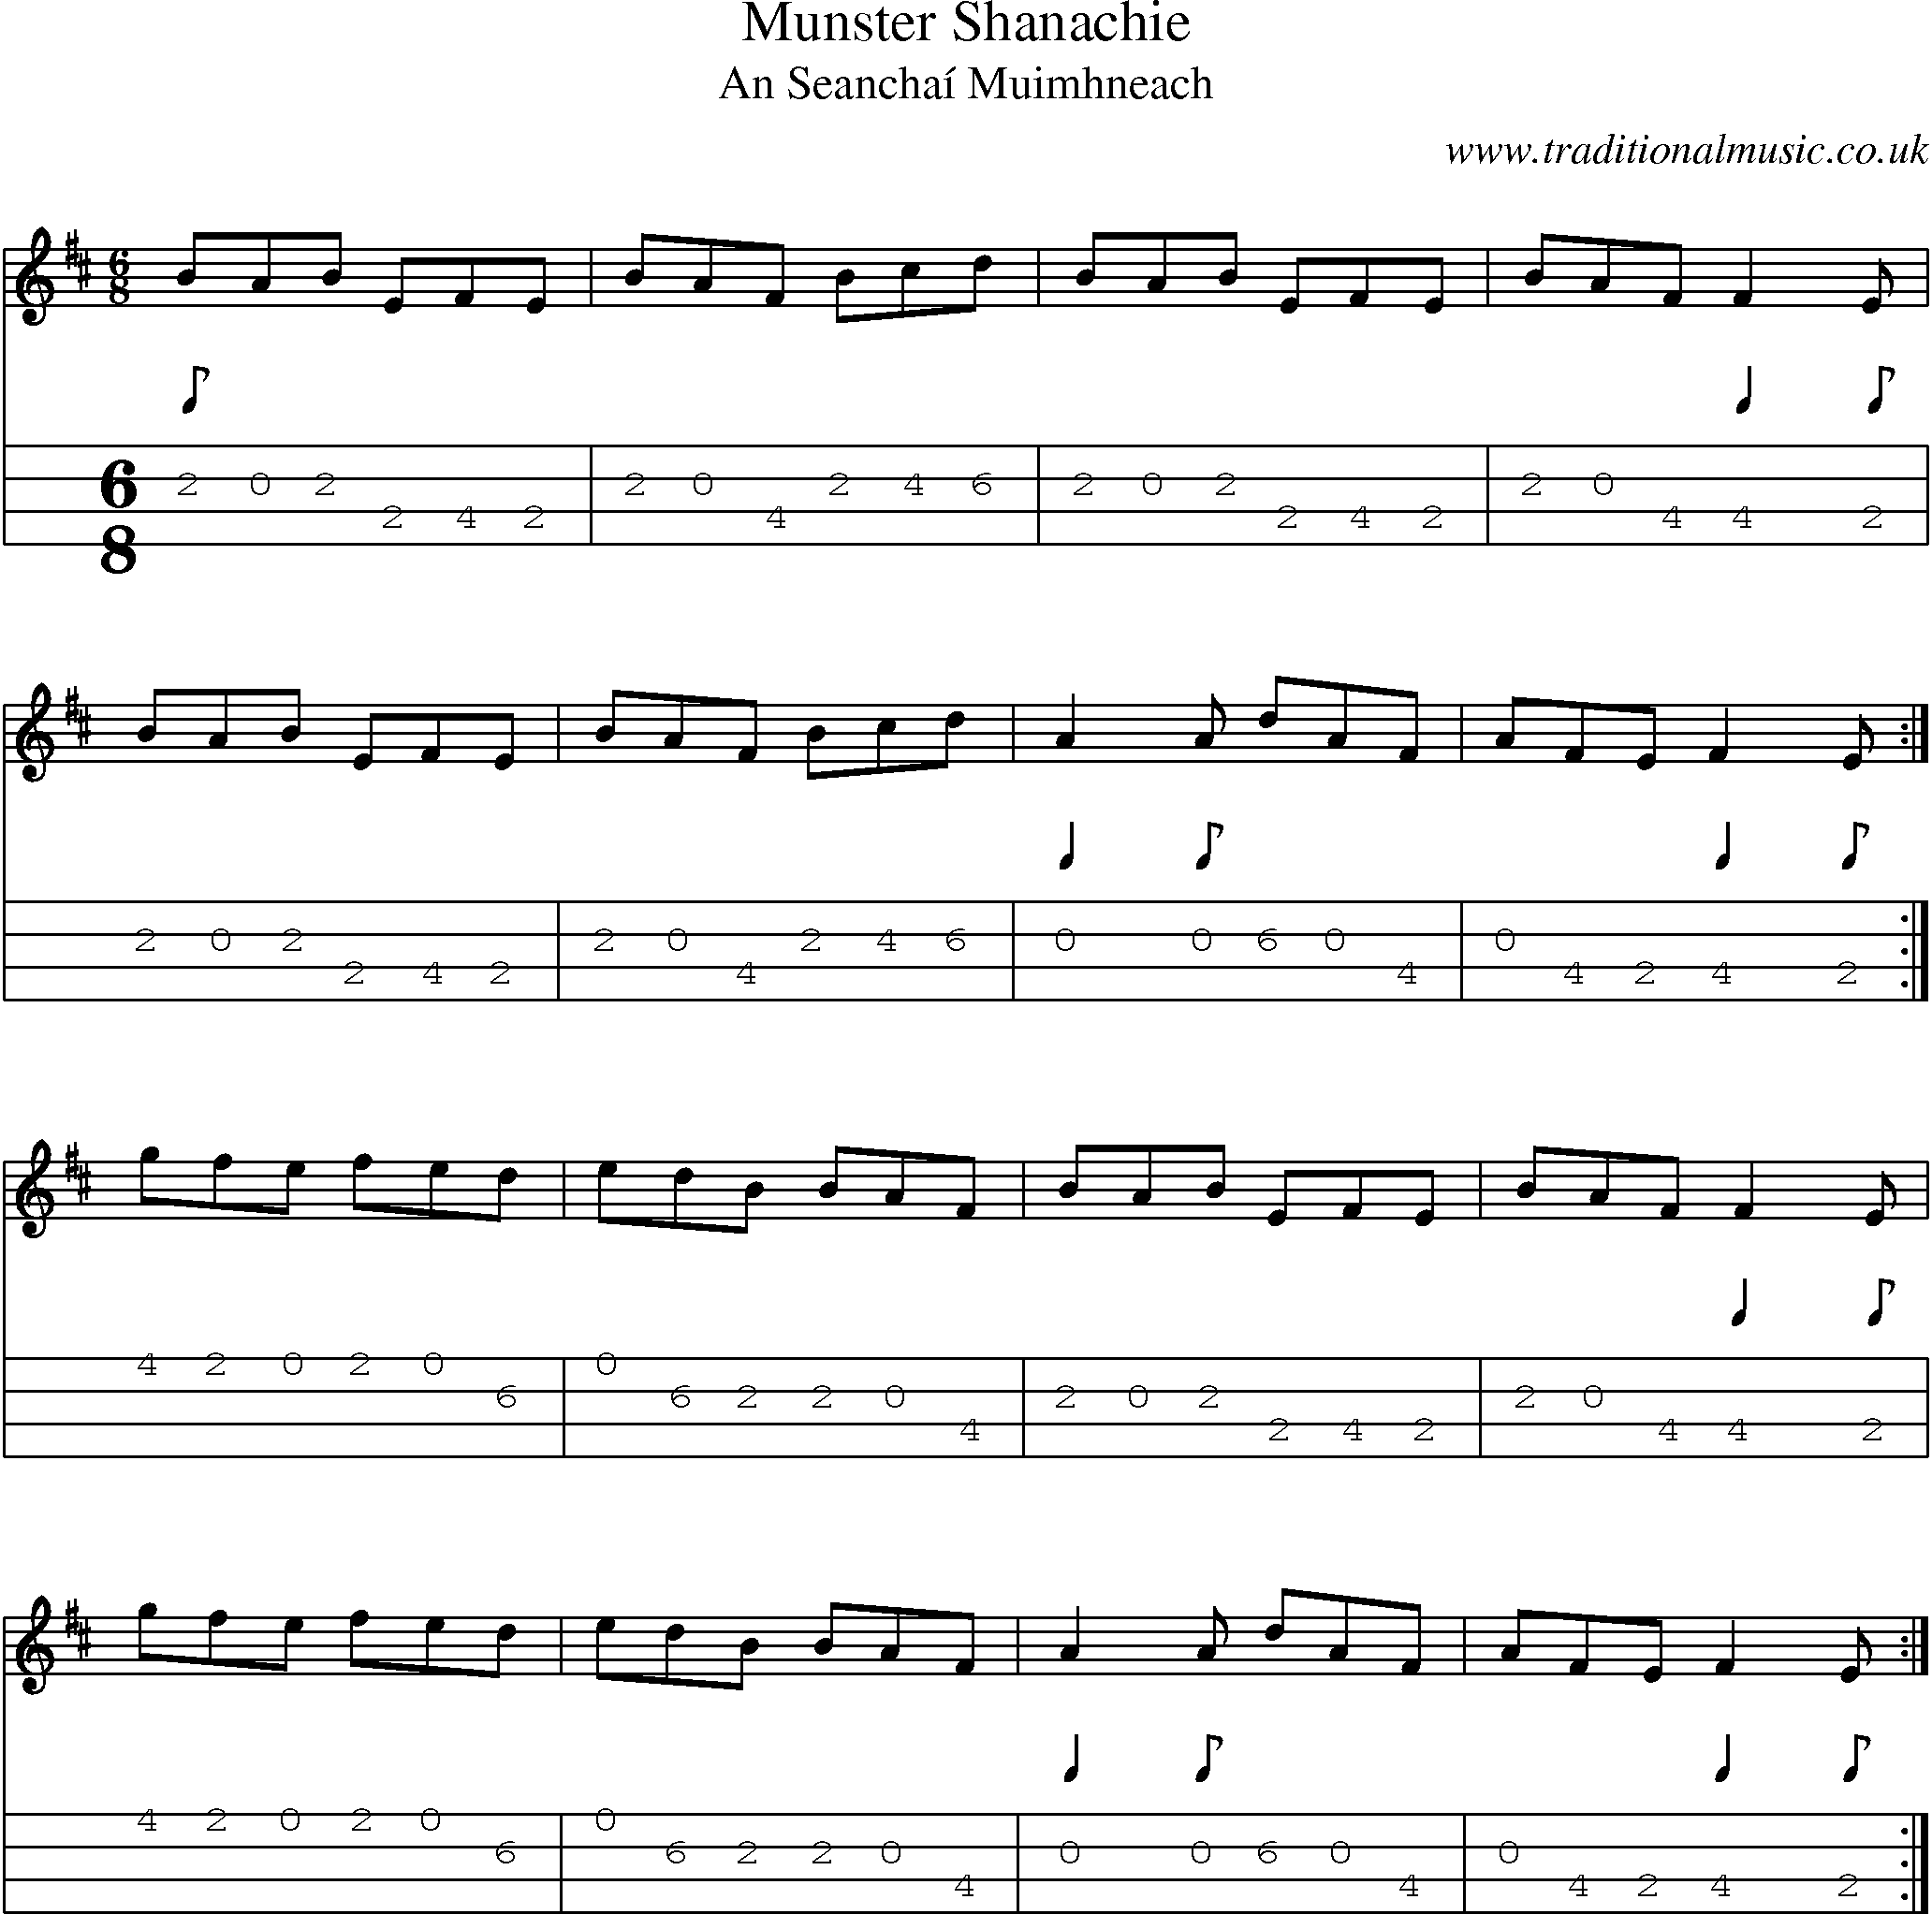 Music Score and Mandolin Tabs for Munster Shanachie